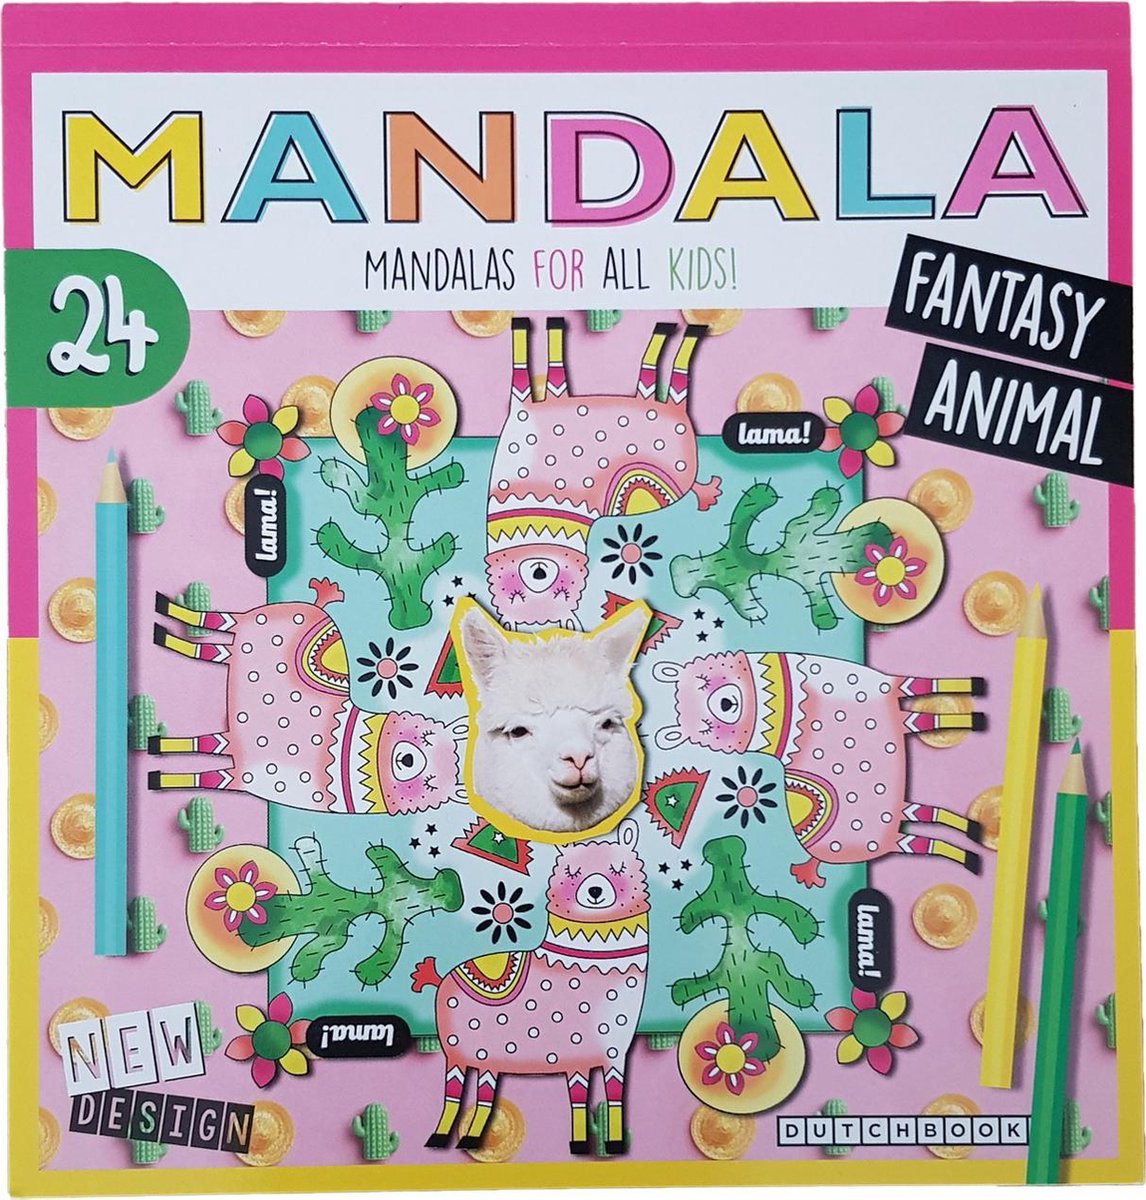 Mandala kleurboek "Fantasy Animal"